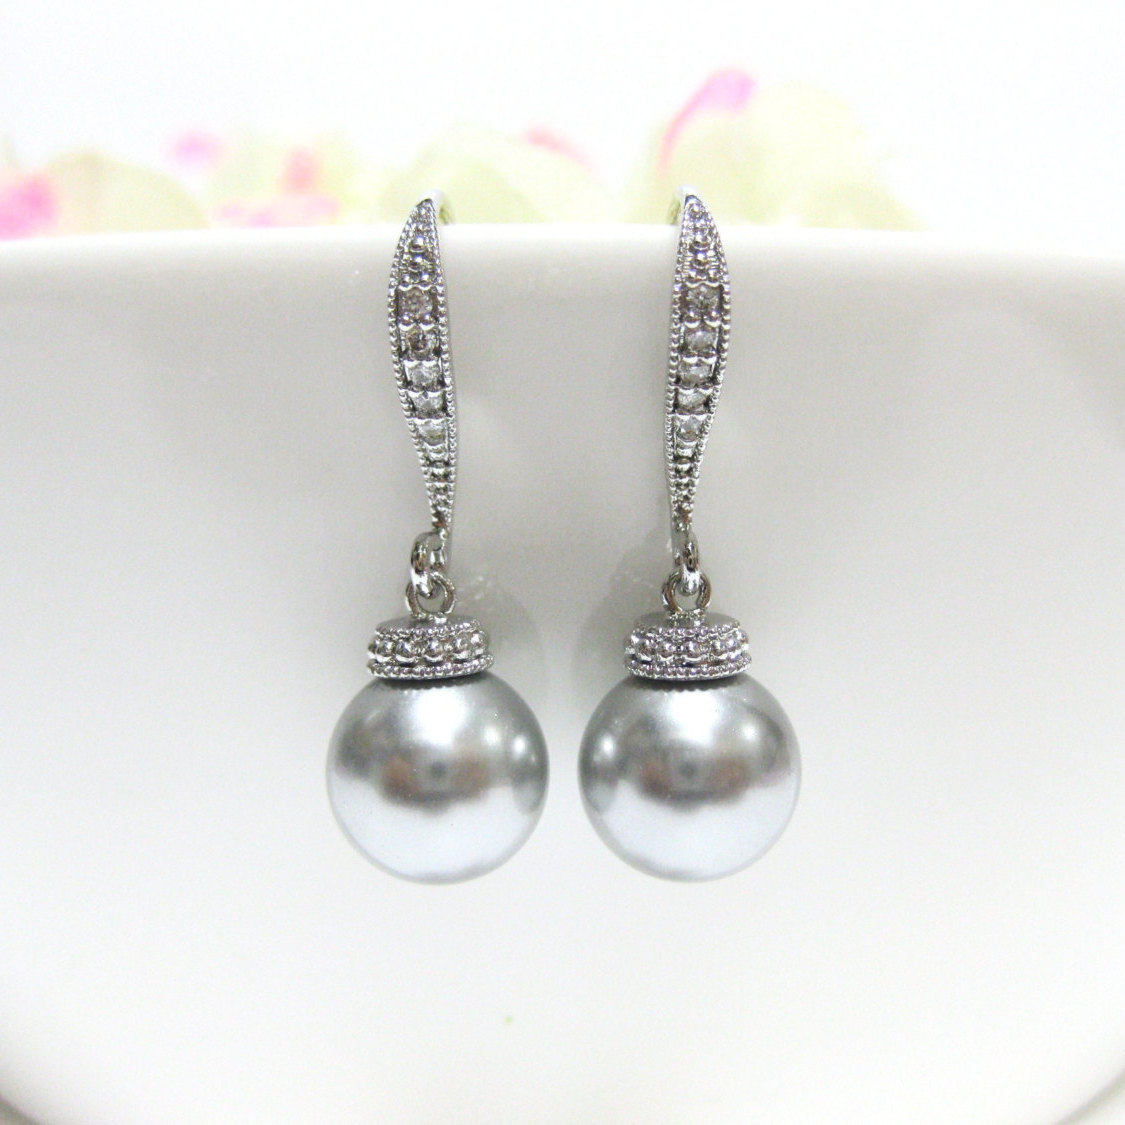 Light Grey Pearl Earrings Bridal Pearl Earrings Swarovski 10mm Round Pearl Pearl Drop Earrings Wedding Jewelry Bridesmaid Gift (e159)